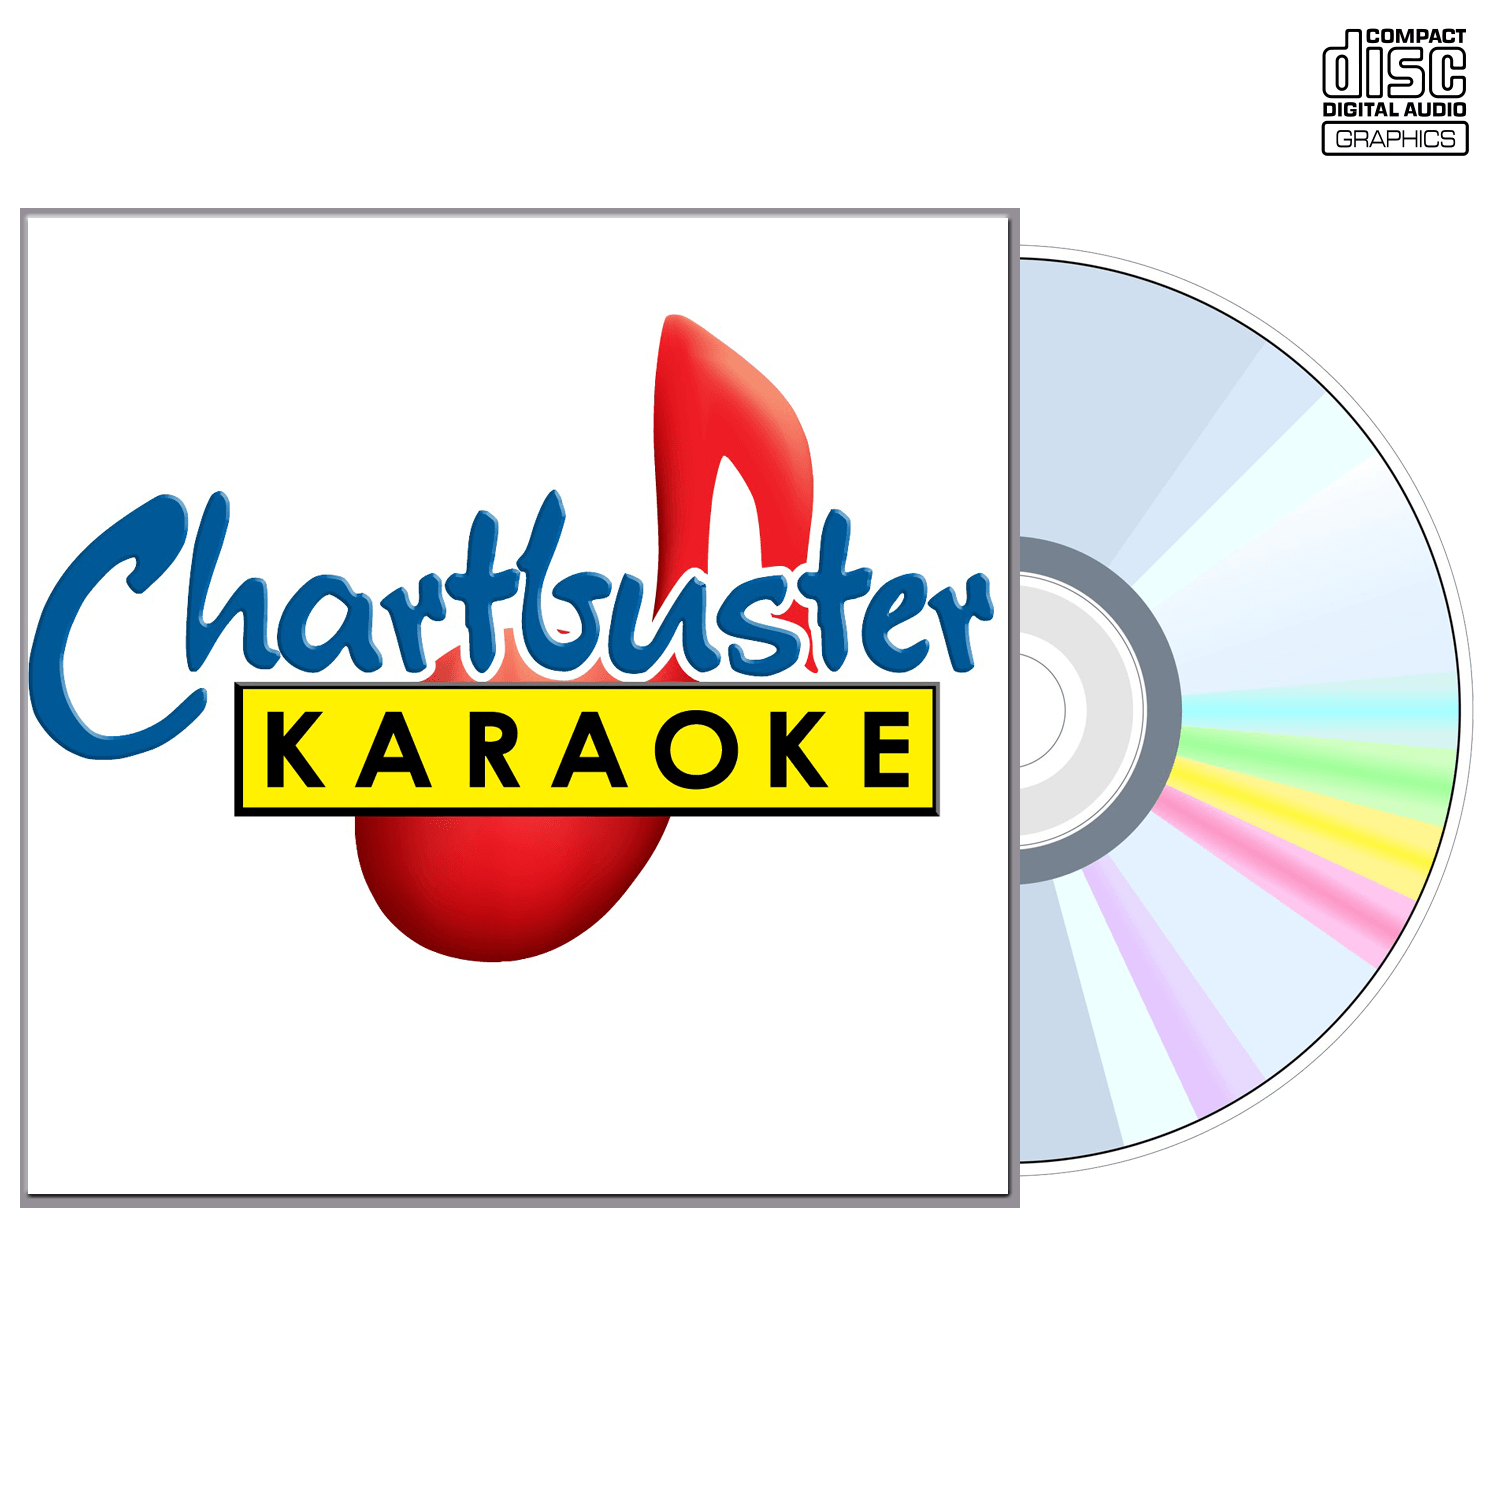 Bbmak - CD+G - Chartbuster Karaoke - Karaoke Home Entertainment